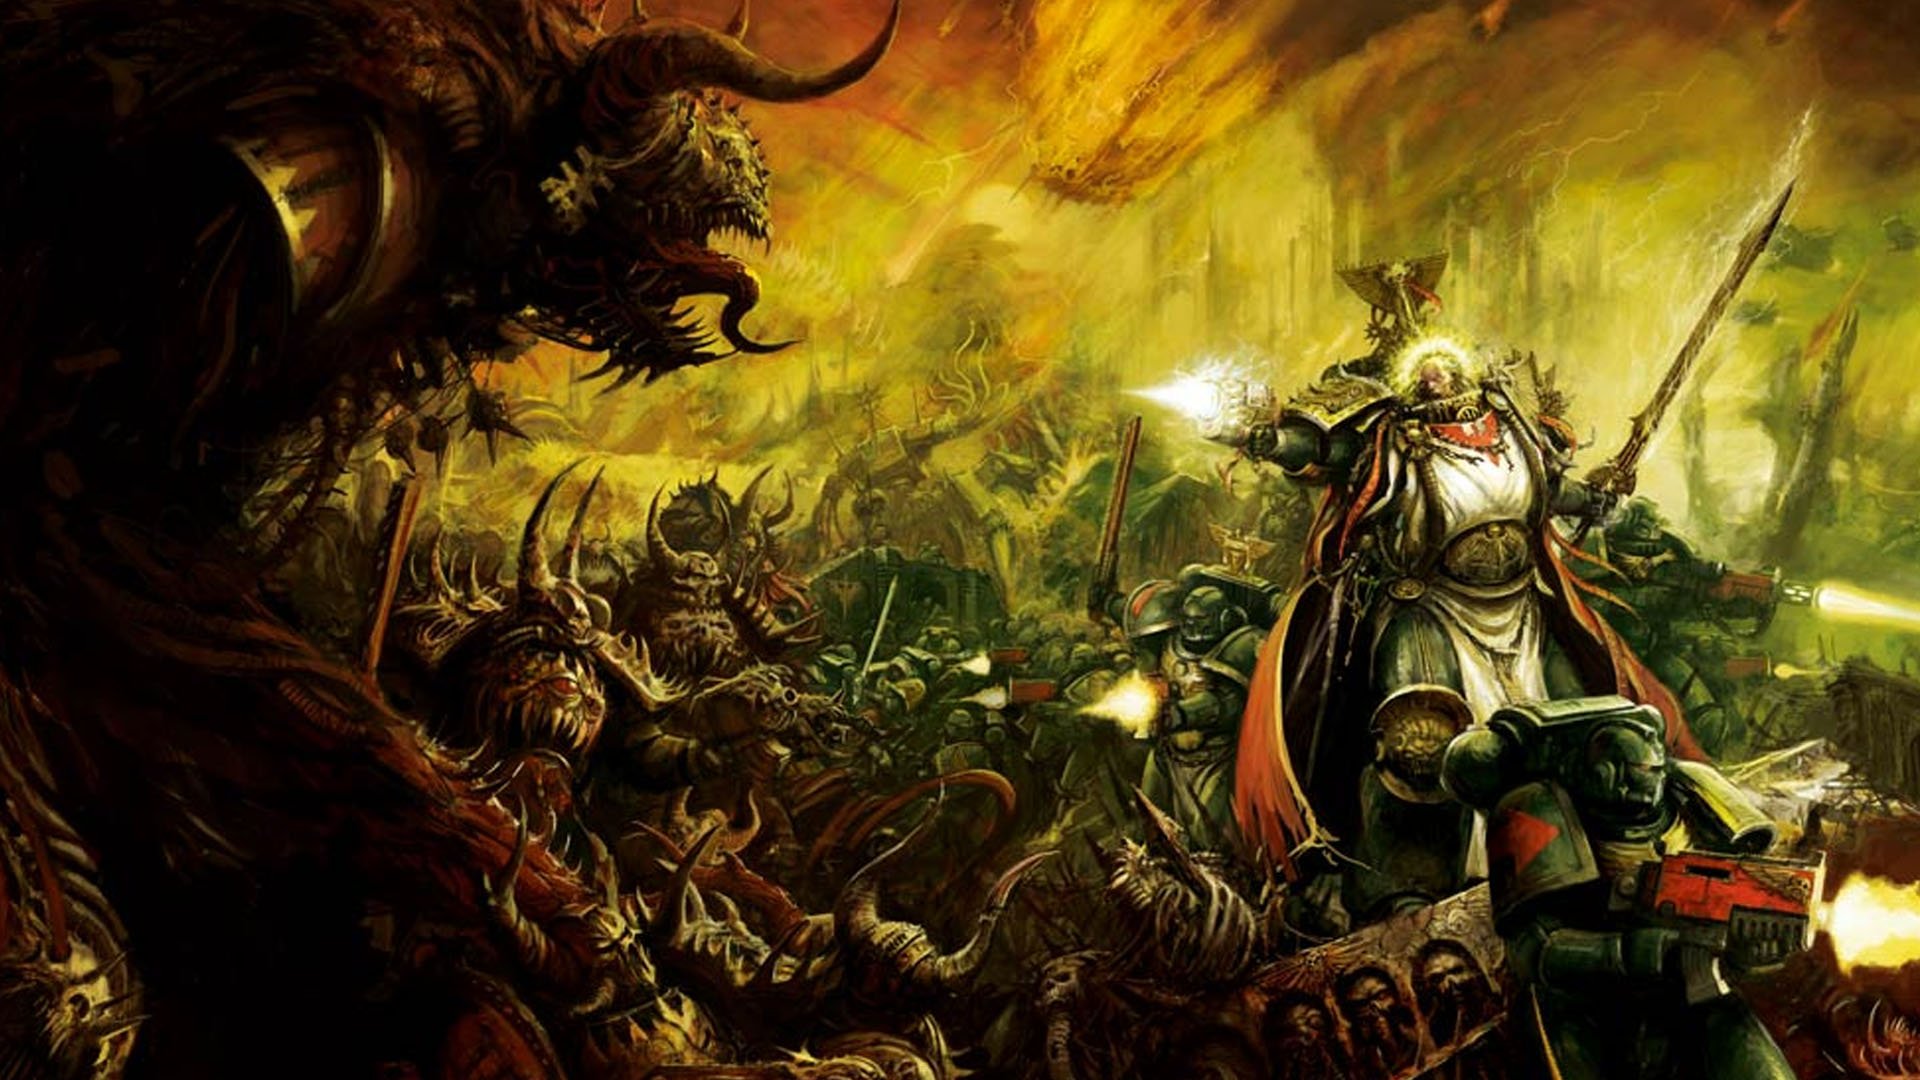 Warhammer 40k Dark Angels - Games Workshop artwork showing Dark Angels Space Marines fighting Chaos